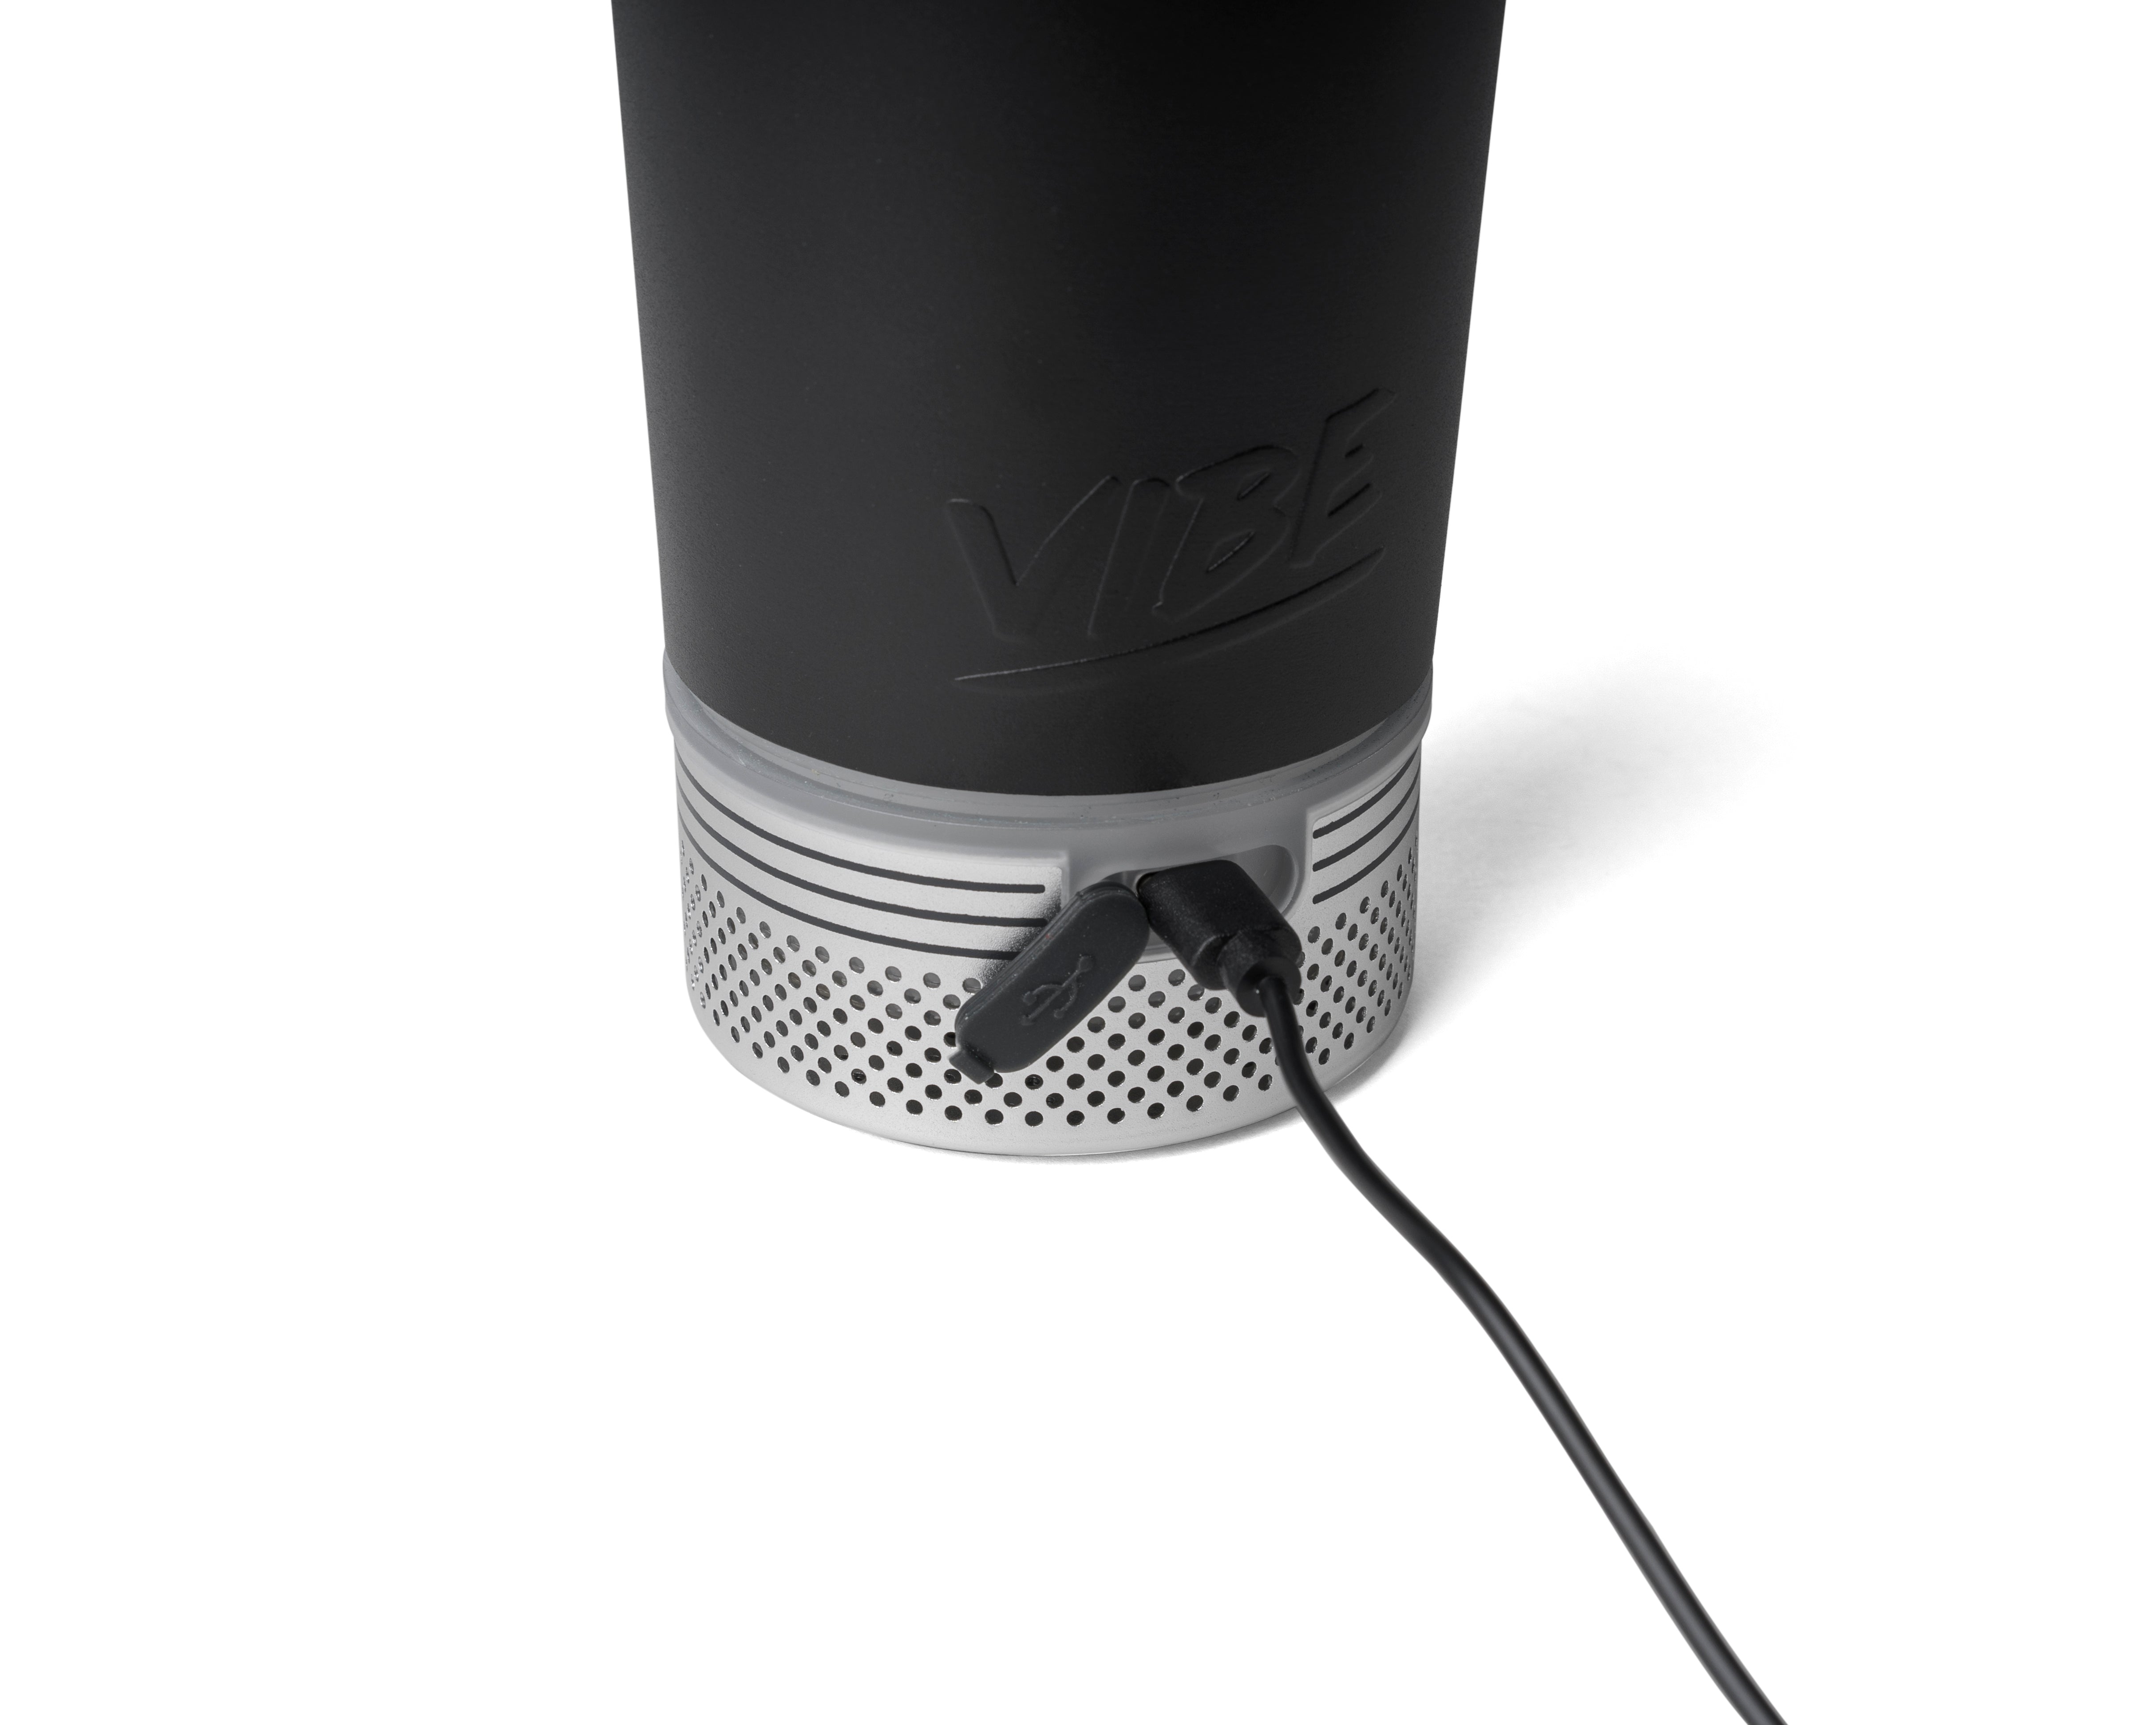 Vibe 18 oz Tumbler & Base Speaker